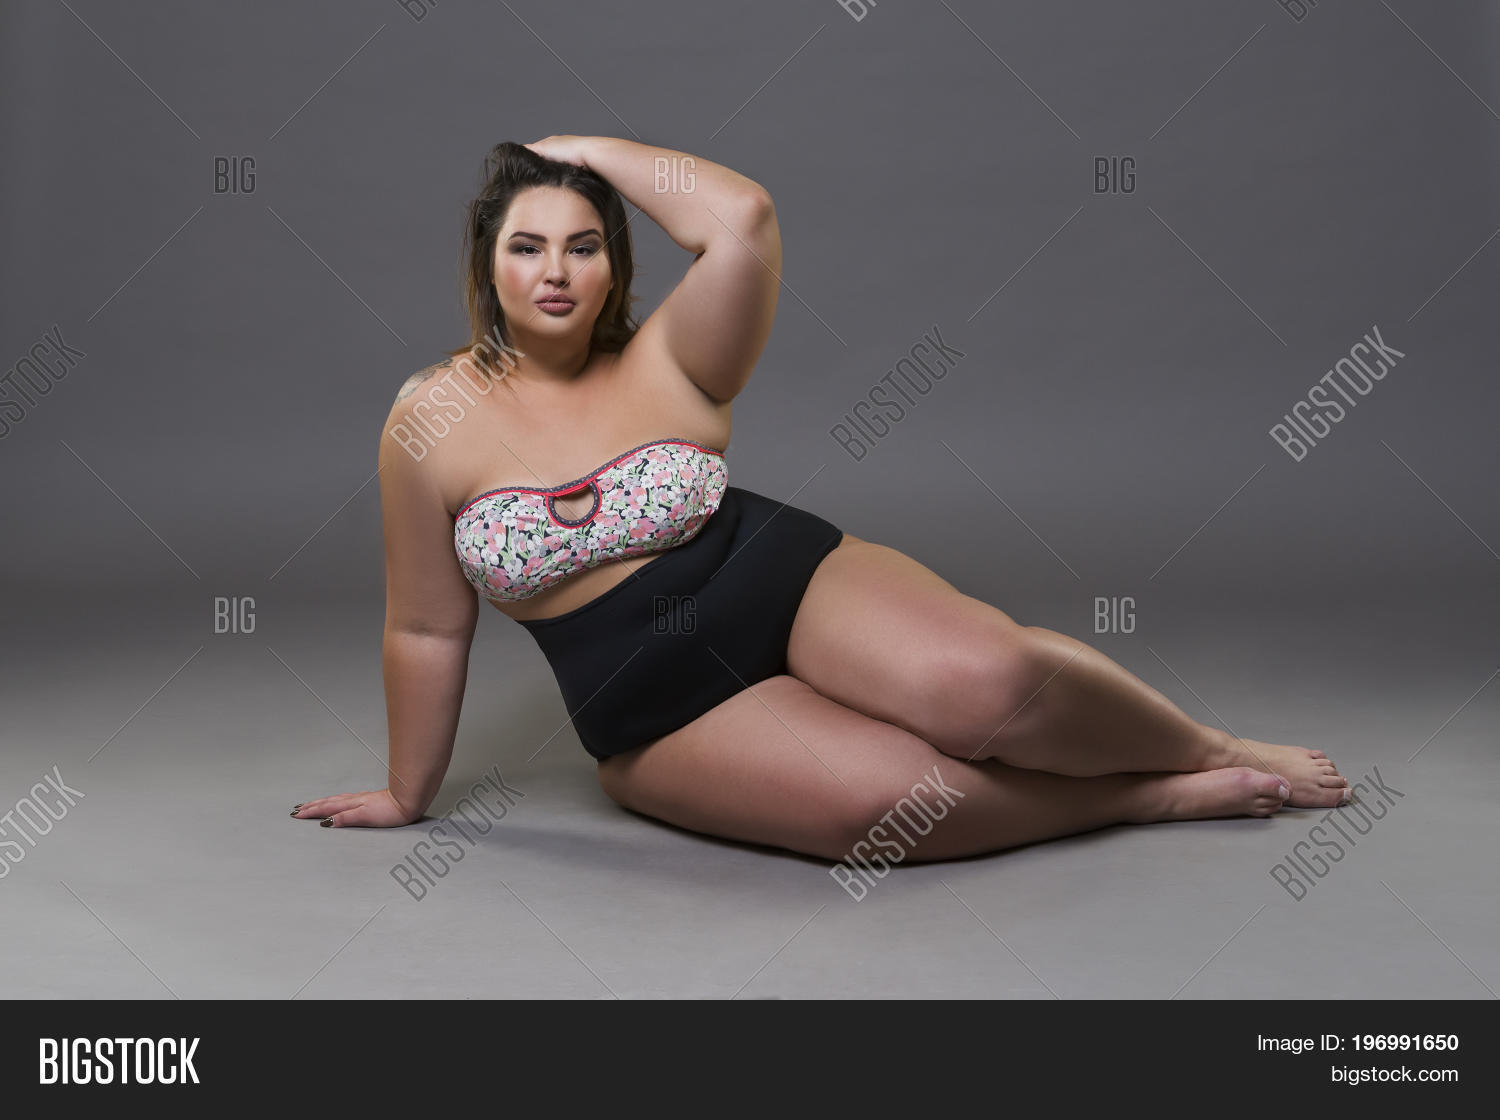 benjamin dobie add sexy fat girl pictures photo